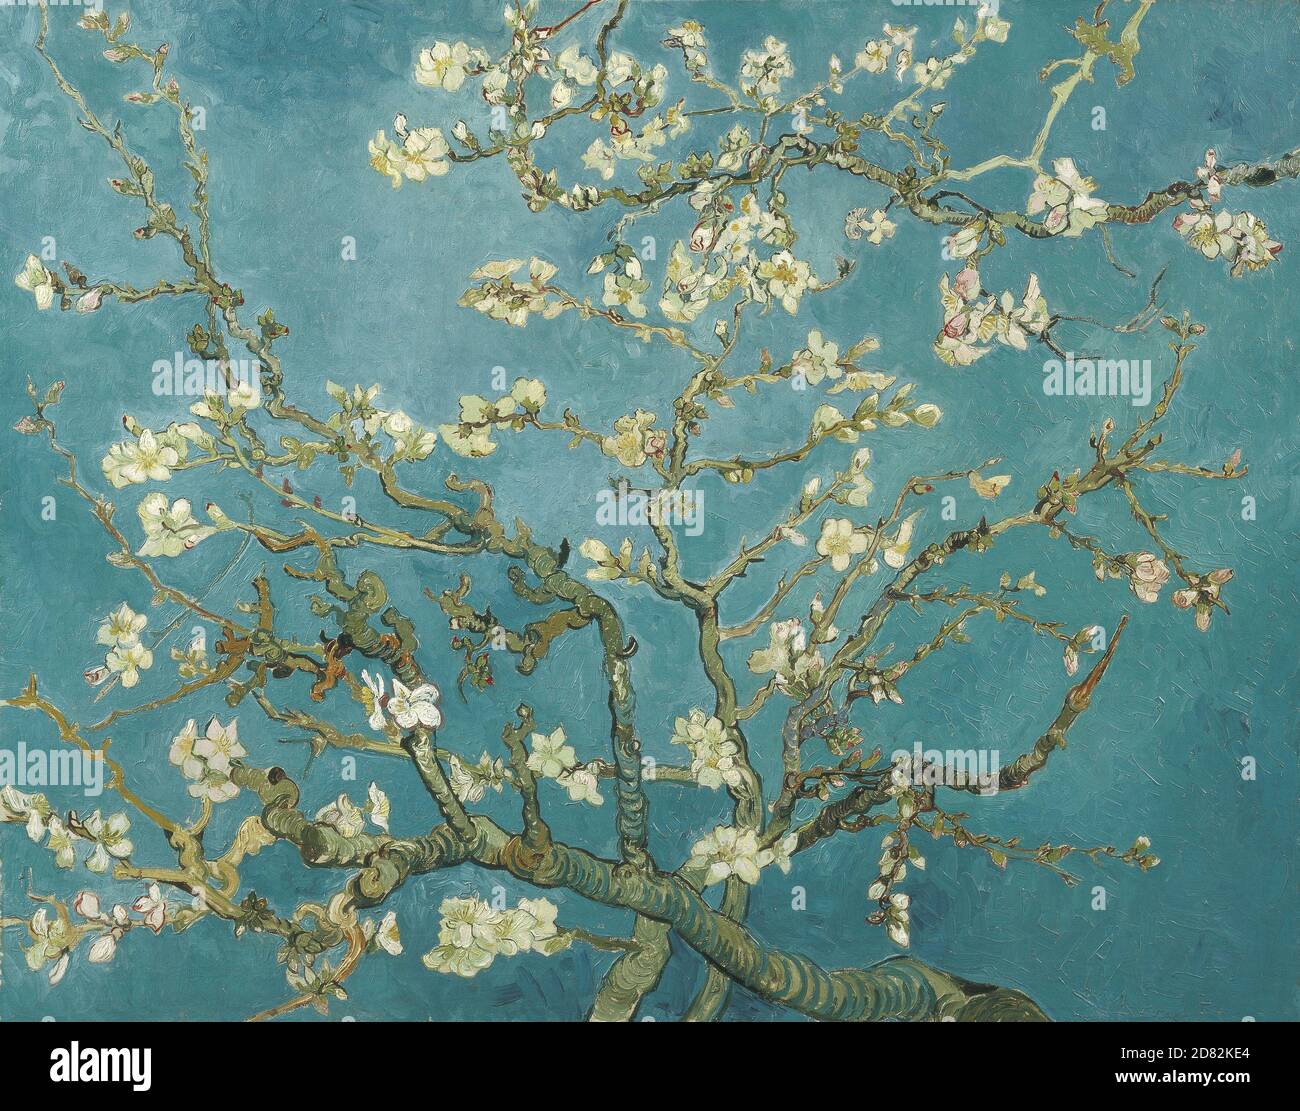 Title: Almond Blossom Creator: Vincent van Gogh Date: 1890 Medium: Oil on canvas Dimensions: 73.3 x 92.4 cm Location: Van Gogh Museum, Amsterdam Stock Photo